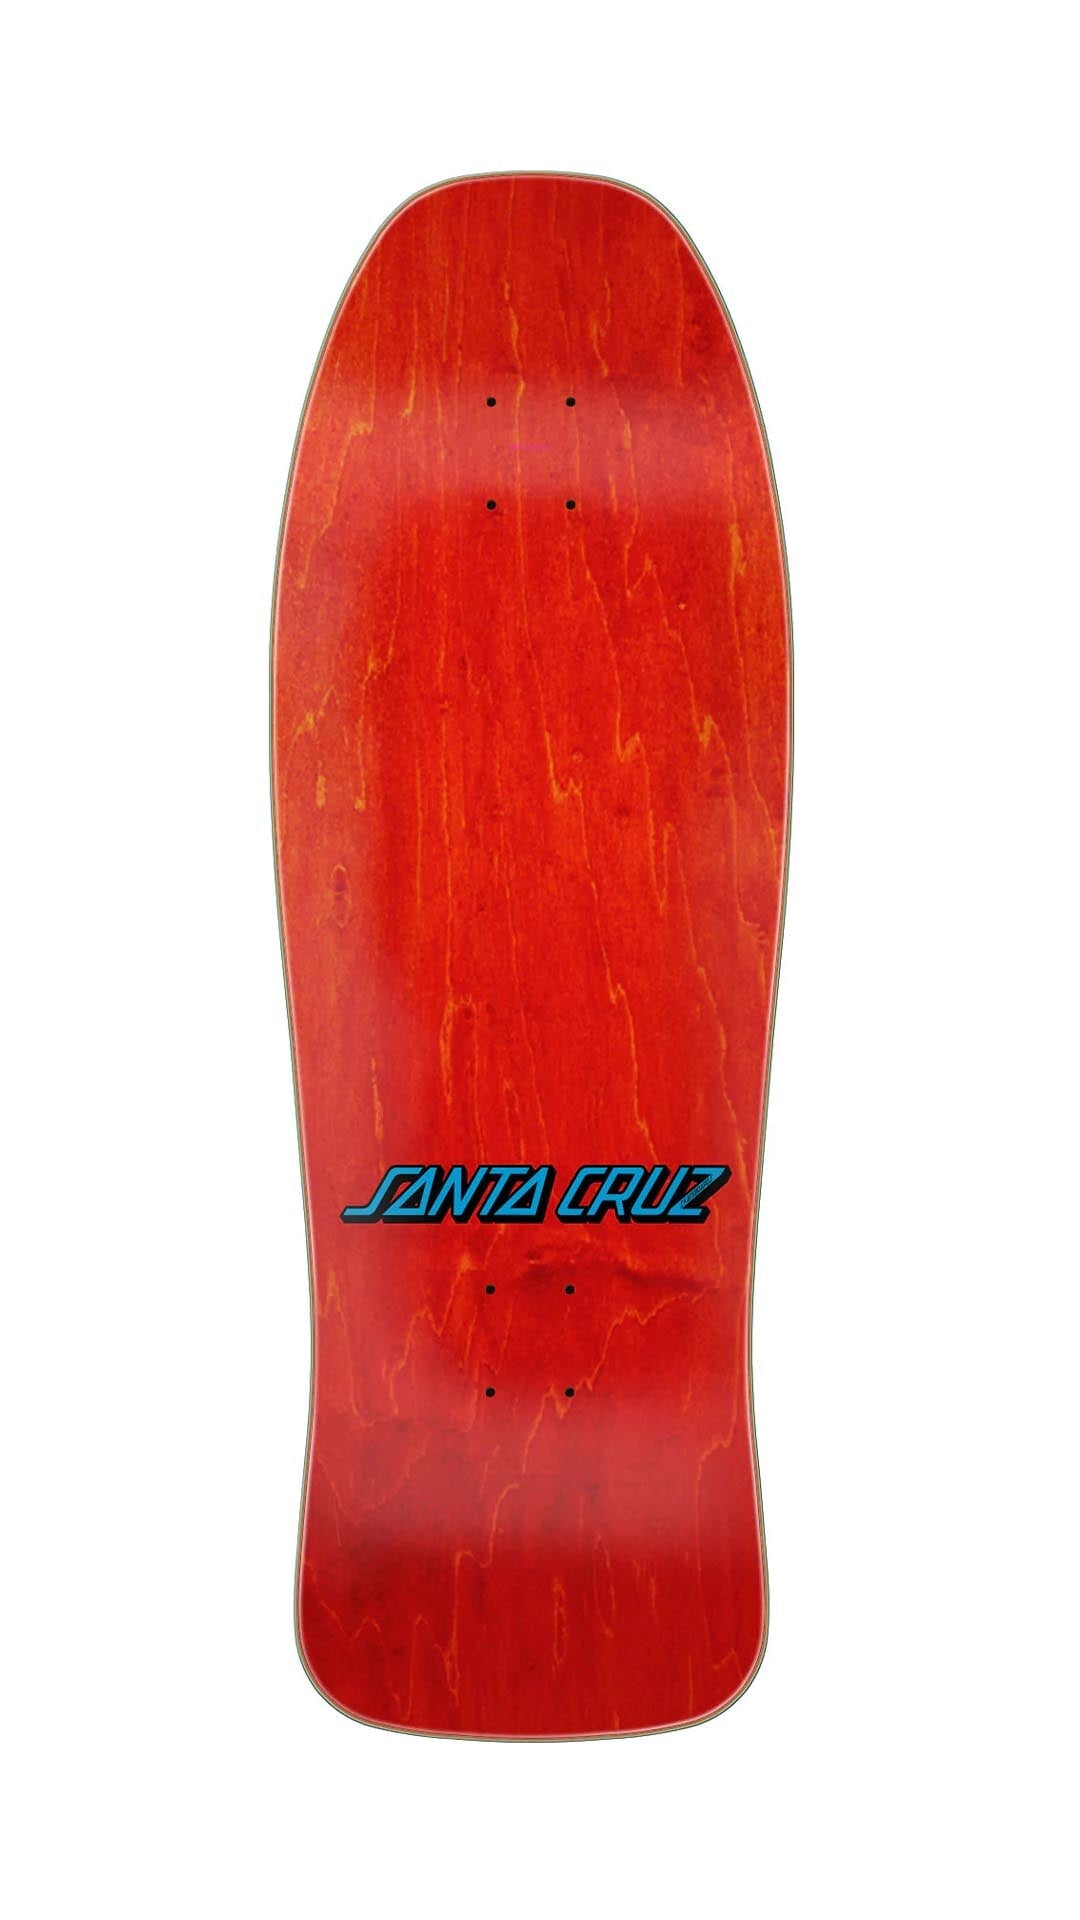 Santa Cruz 9.975 Kendall Snake Reissue Skateboard Deck Prebook - Reserva Tabla/Deck Santa Cruz Skateboards 